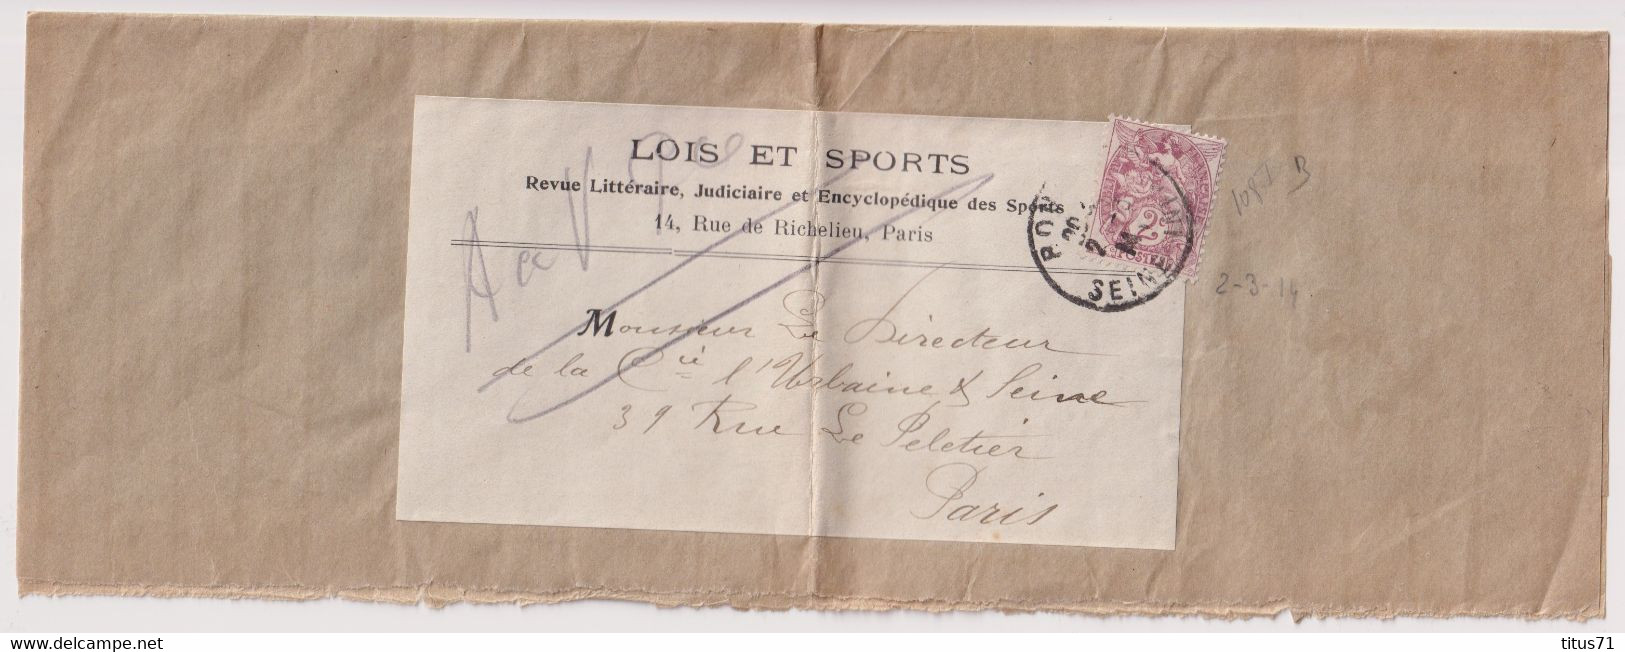 Bande De Journal Timbre 2 Centimes Sage - Journal Lois Et Sports - Circulée 1914 - Newspapers